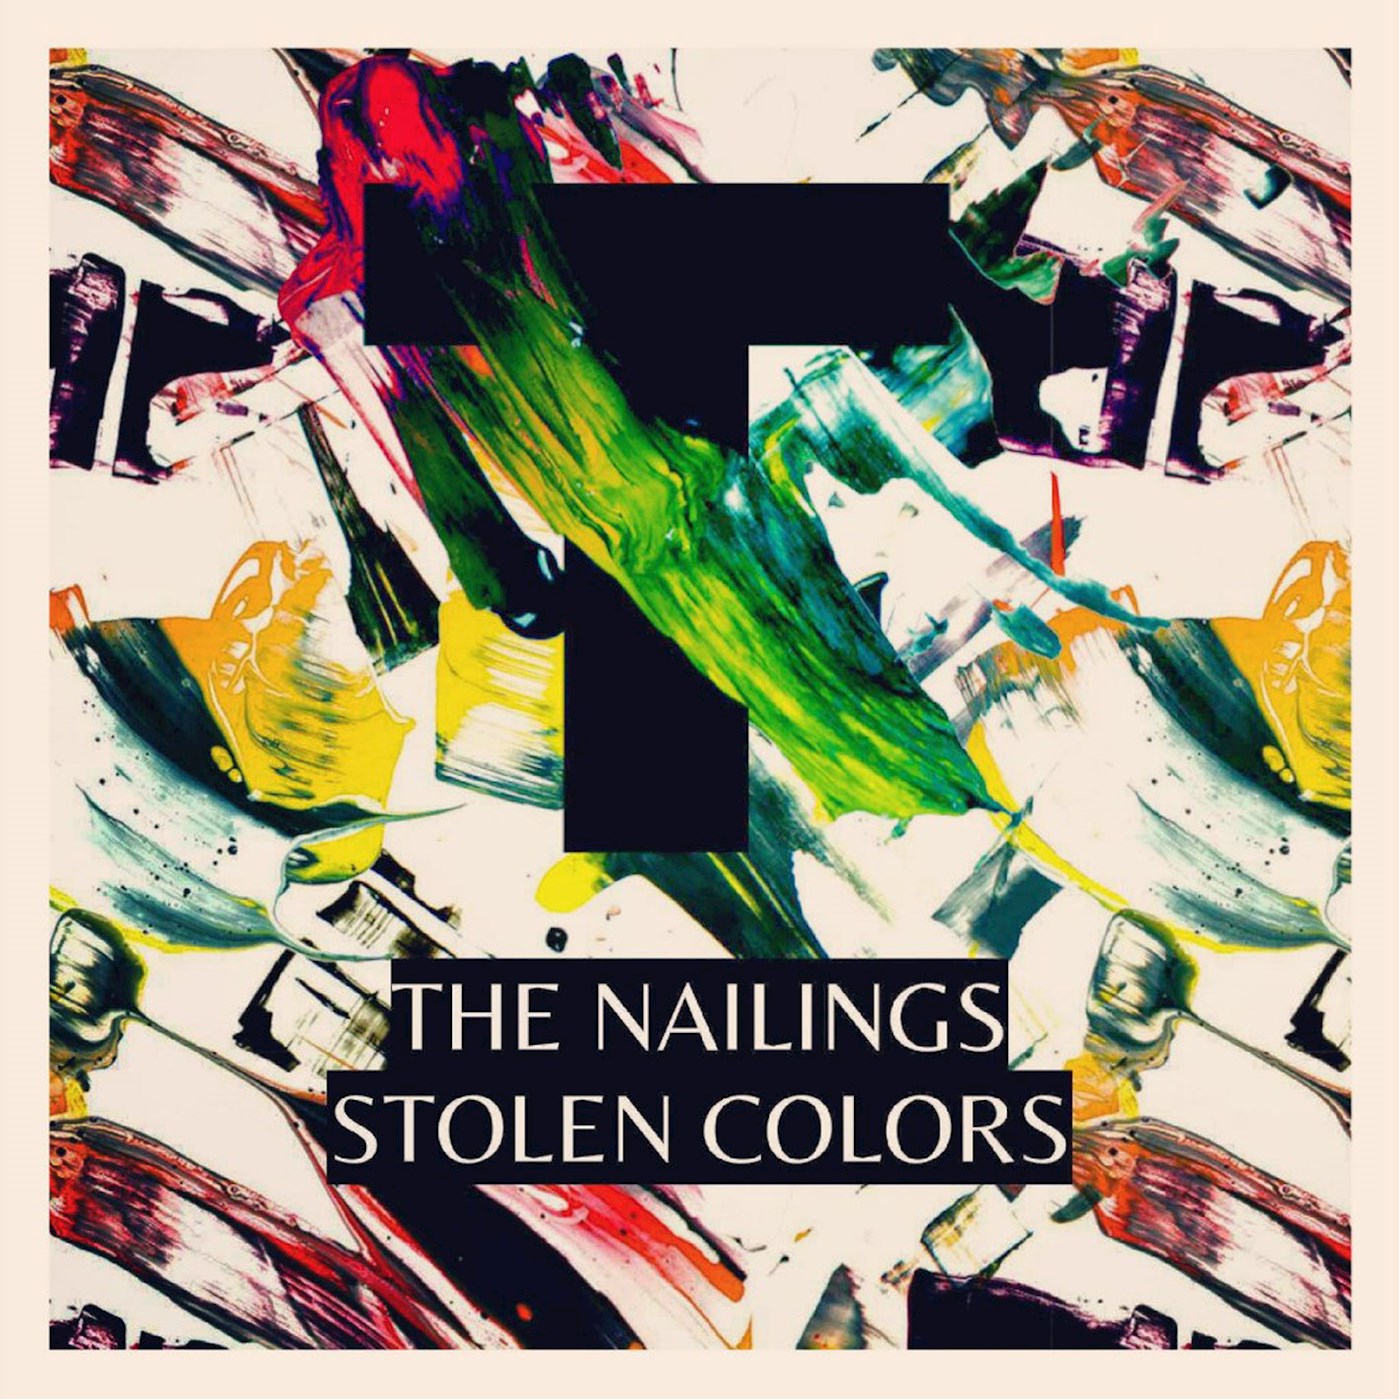 The Nailings Stolen Colors